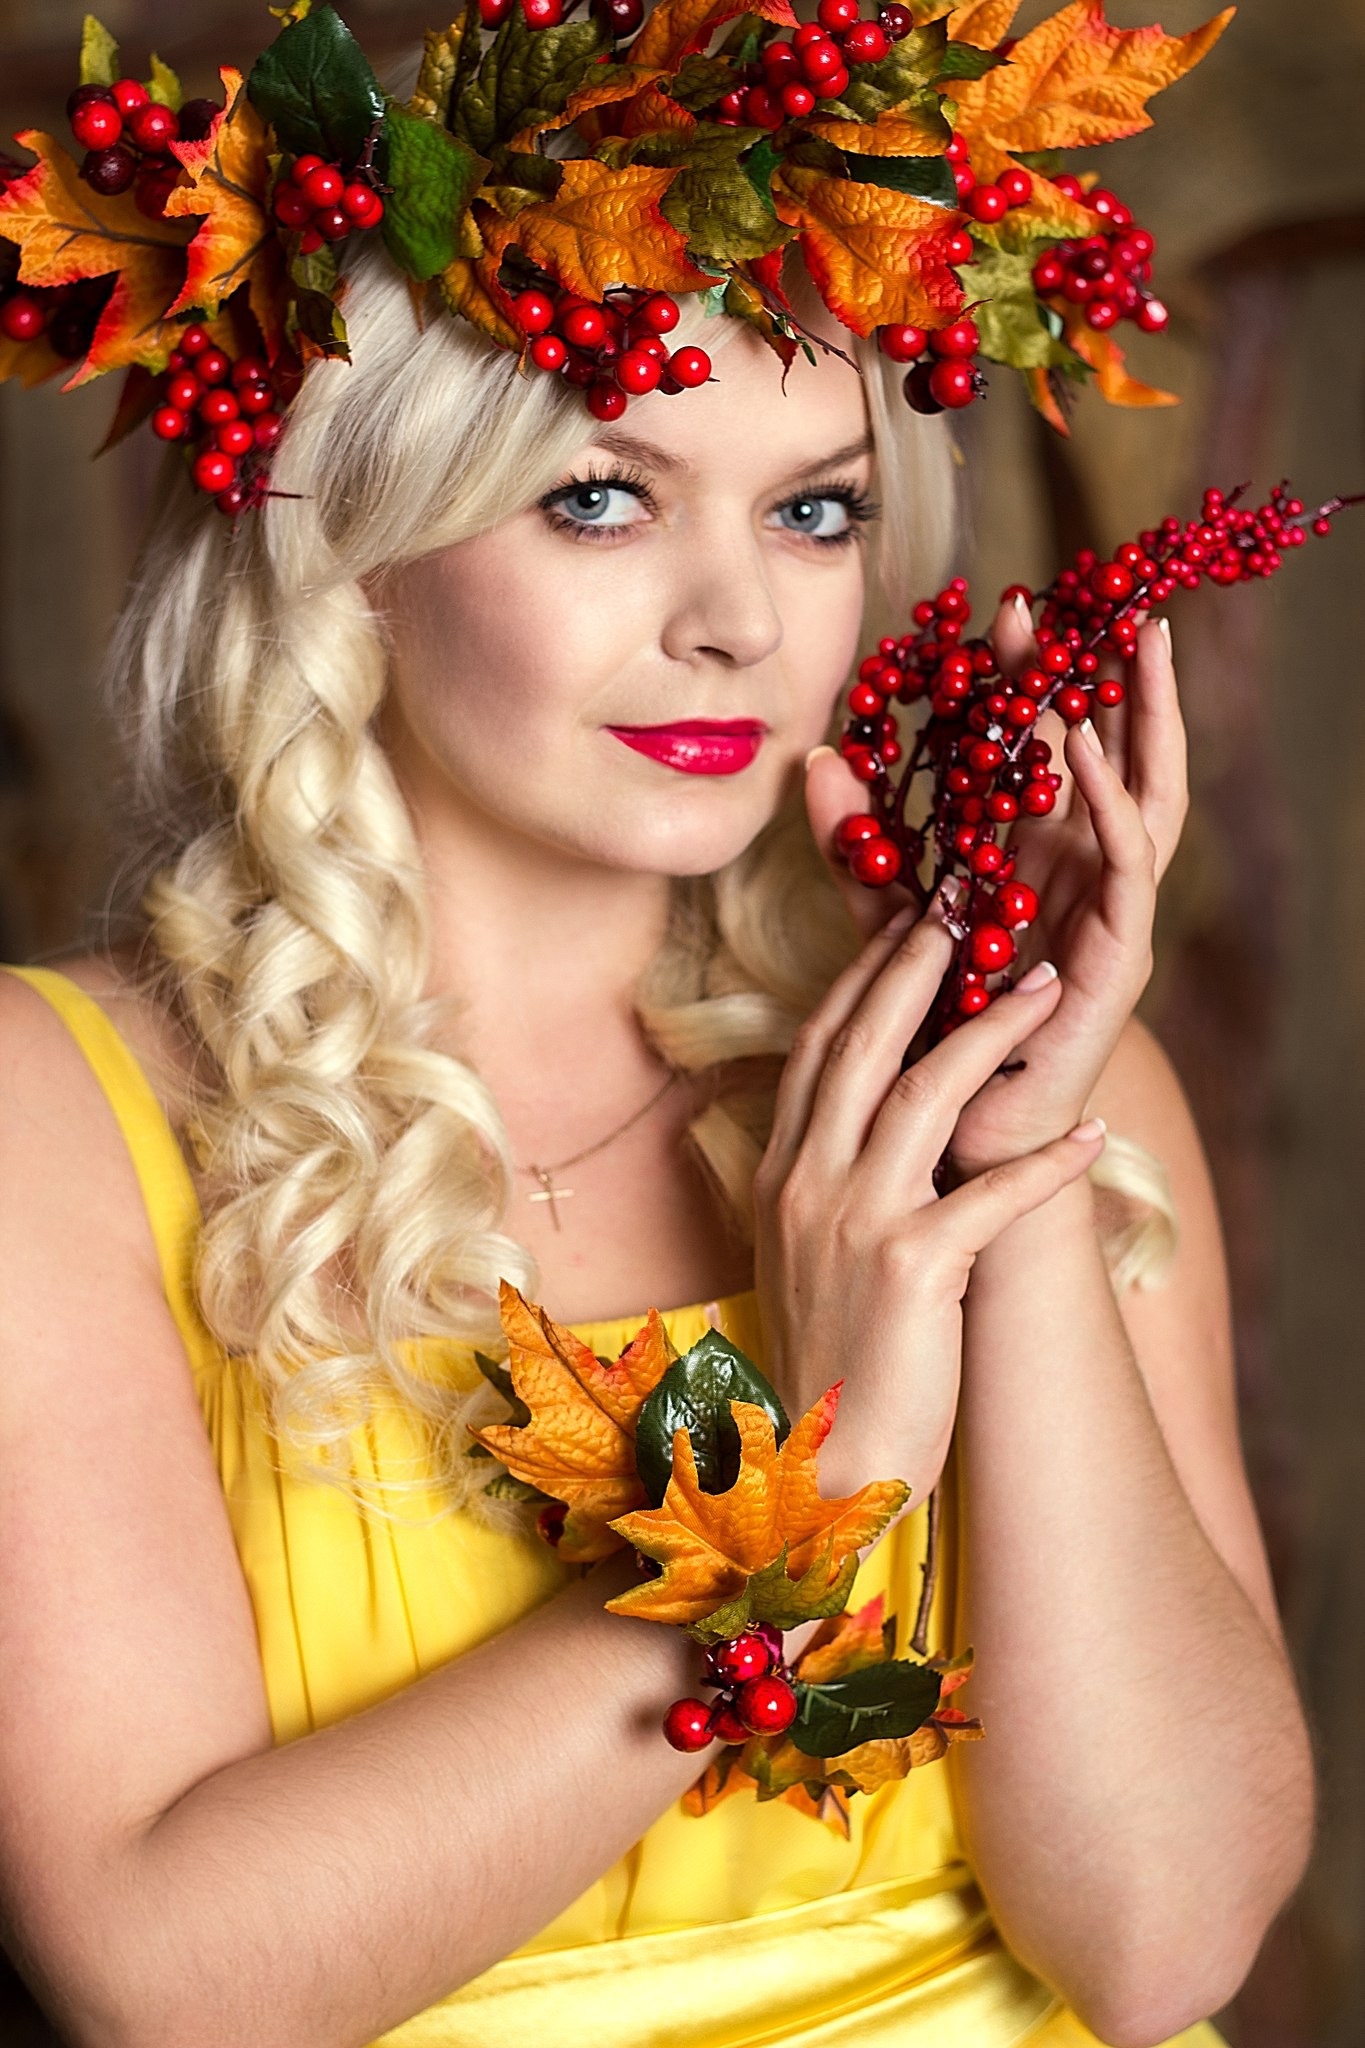 Rowan Wreath Girl Wallpapers High Quality | Download Free